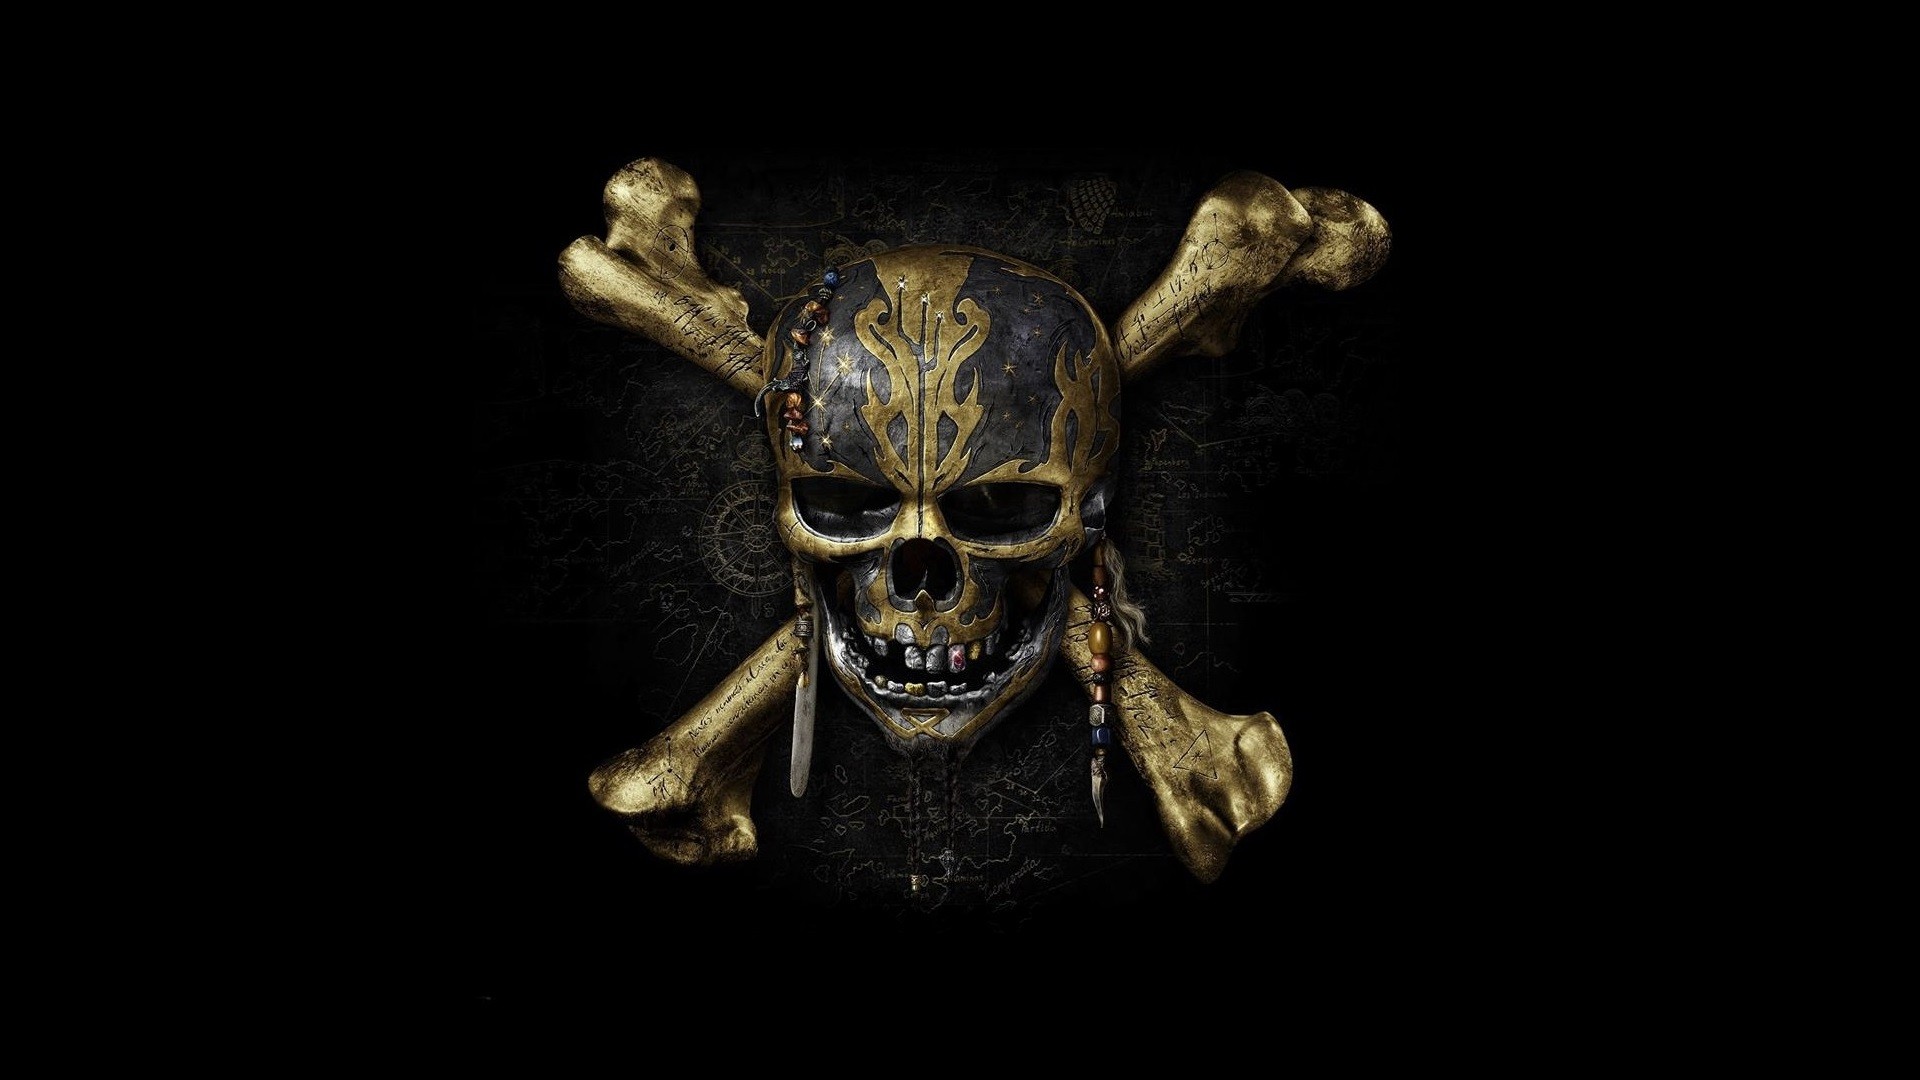 General 1920x1080 skull black background skull and bones movies